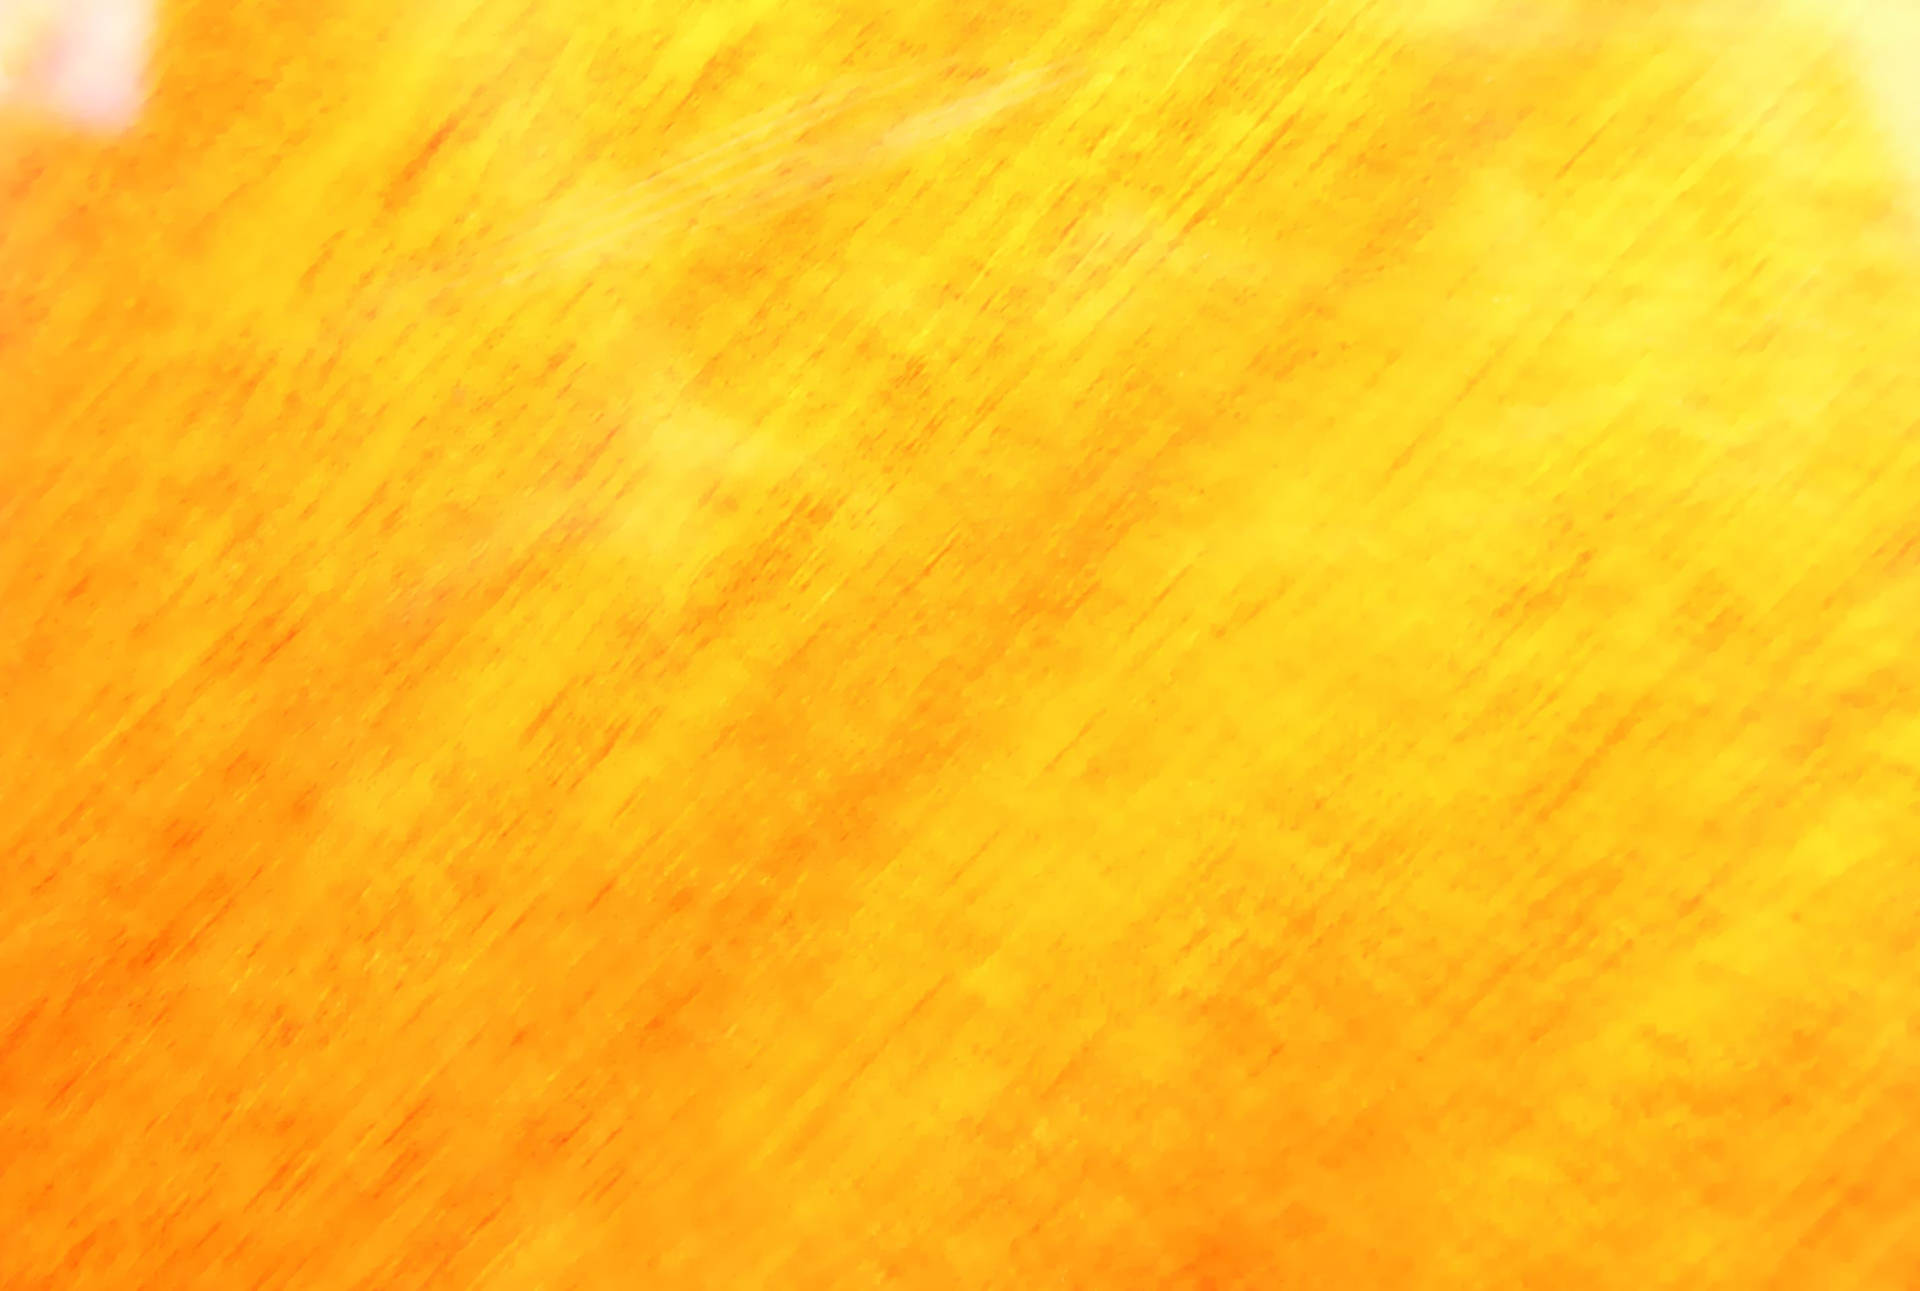 Plain Yellow And Orange Textured Desktop Wallpaper